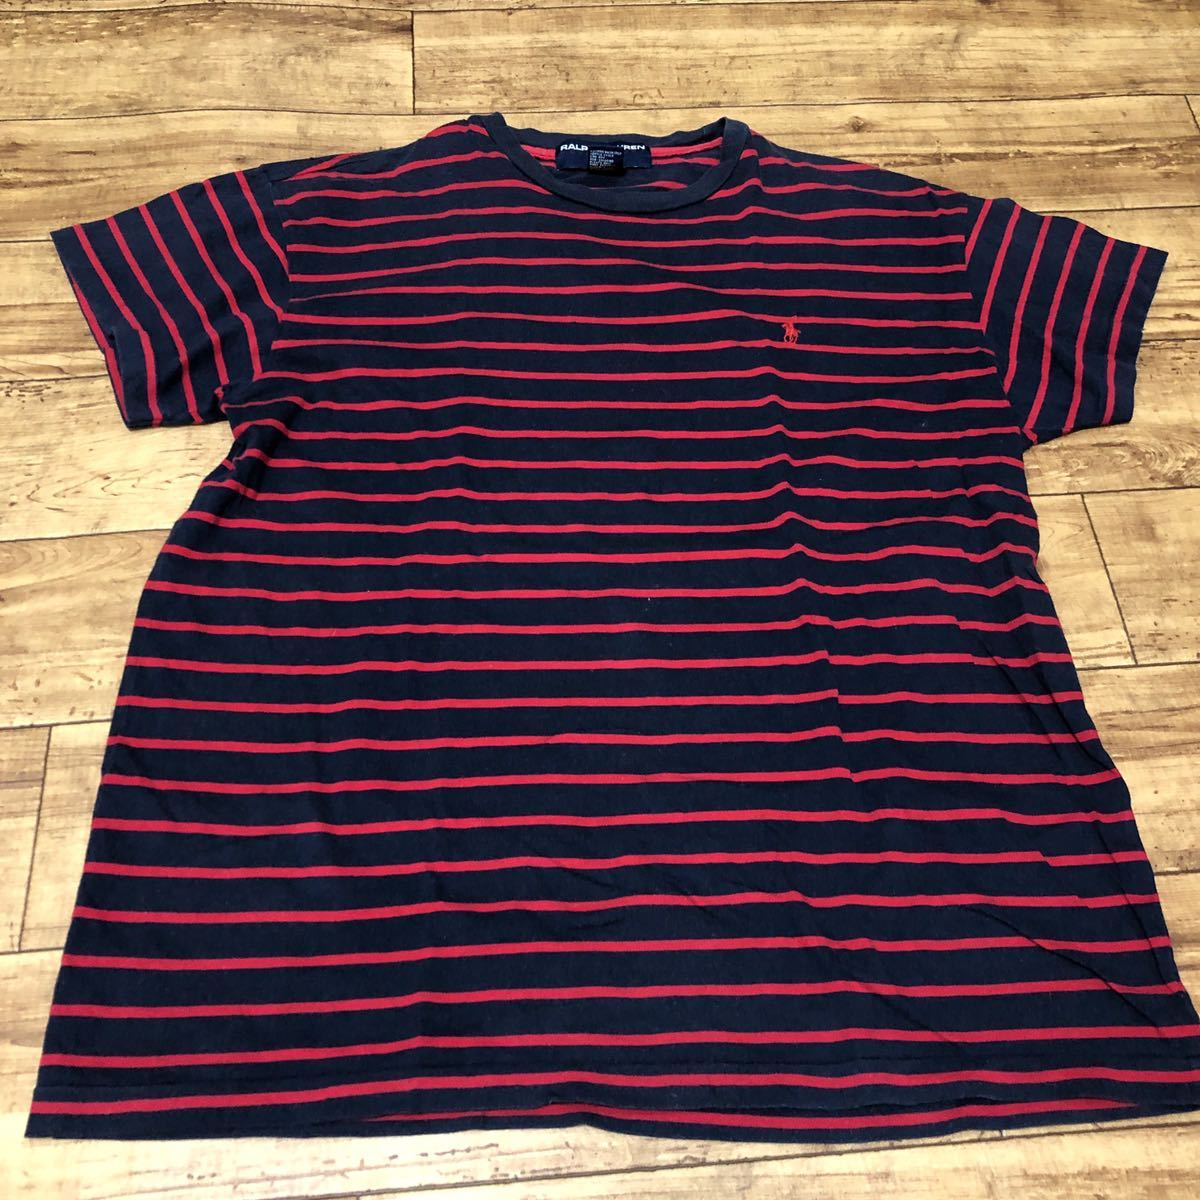  Polo спорт Ralph Lauren POLO SPORT RALPH LAUREN короткий рукав футболка окантовка темно-синий & красный M размер 